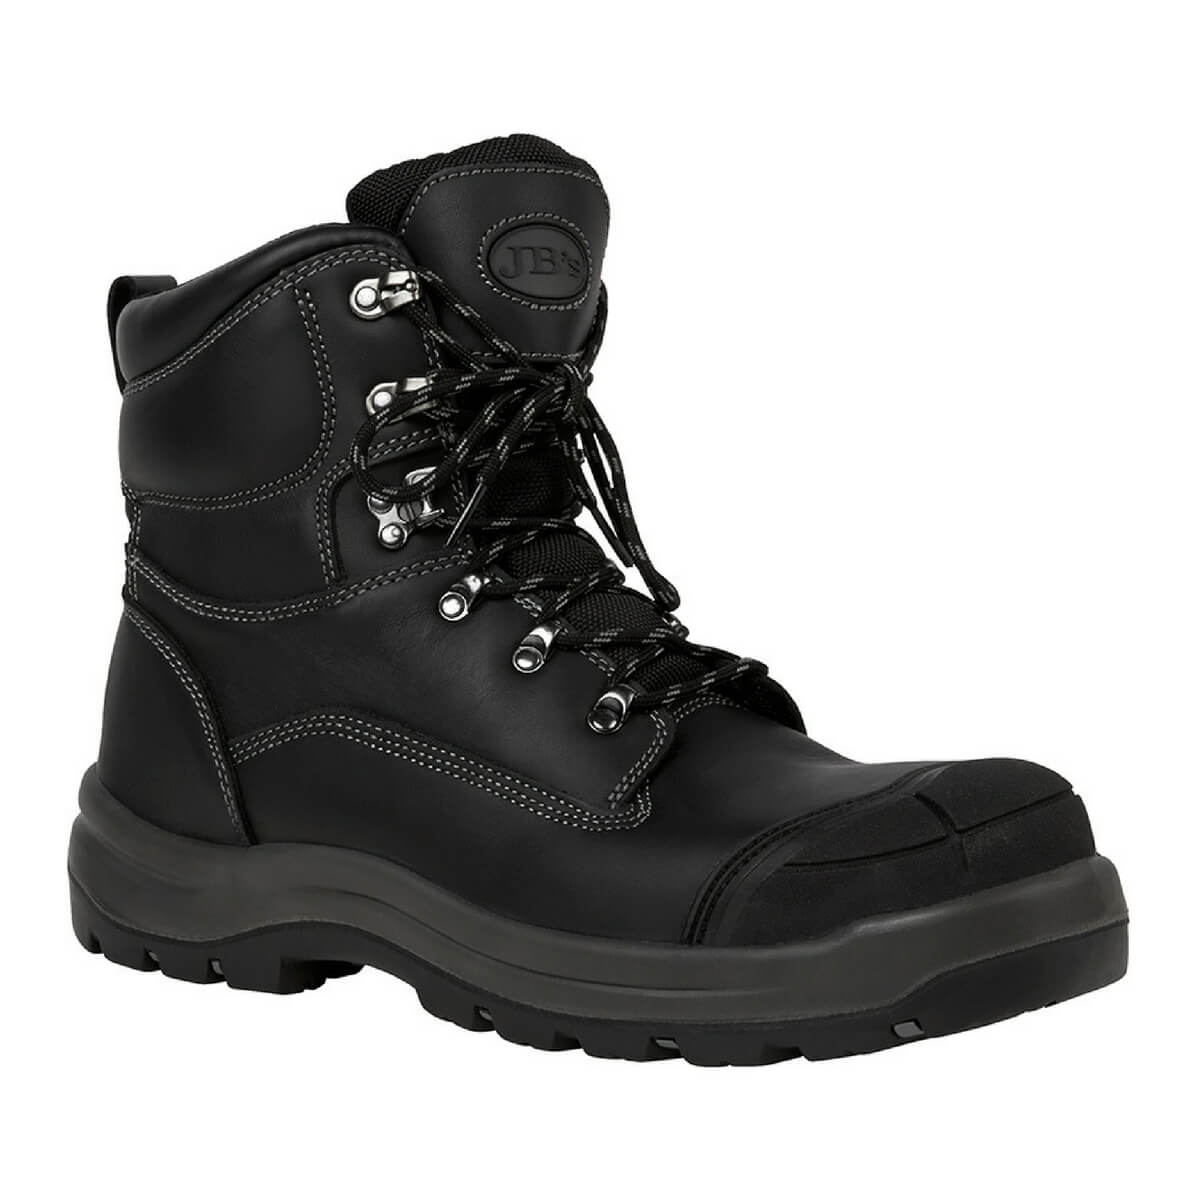 JB's 9F1 Composite Toe Side Zip Safety Boots | Badger